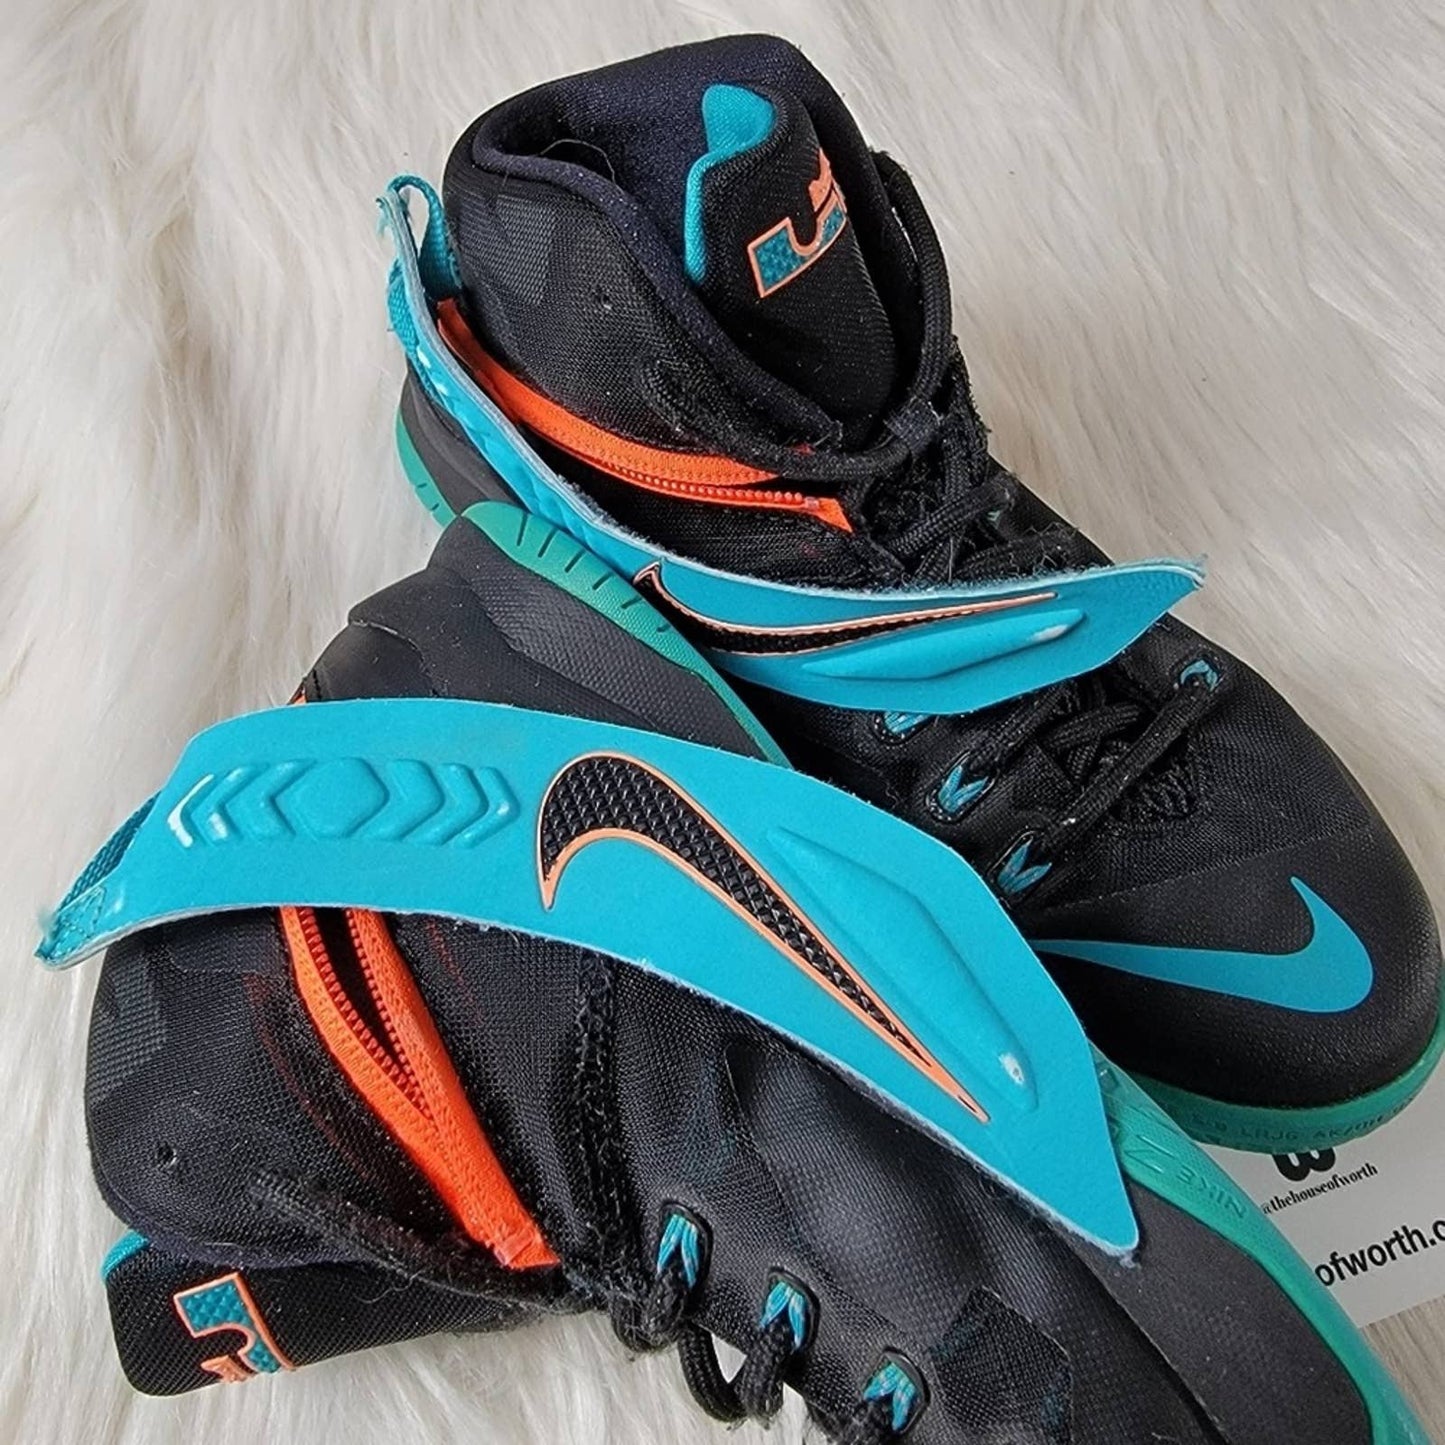 Nike Air Zoom Soldier VIII Rare Basketball Sneakers - 7.5/9